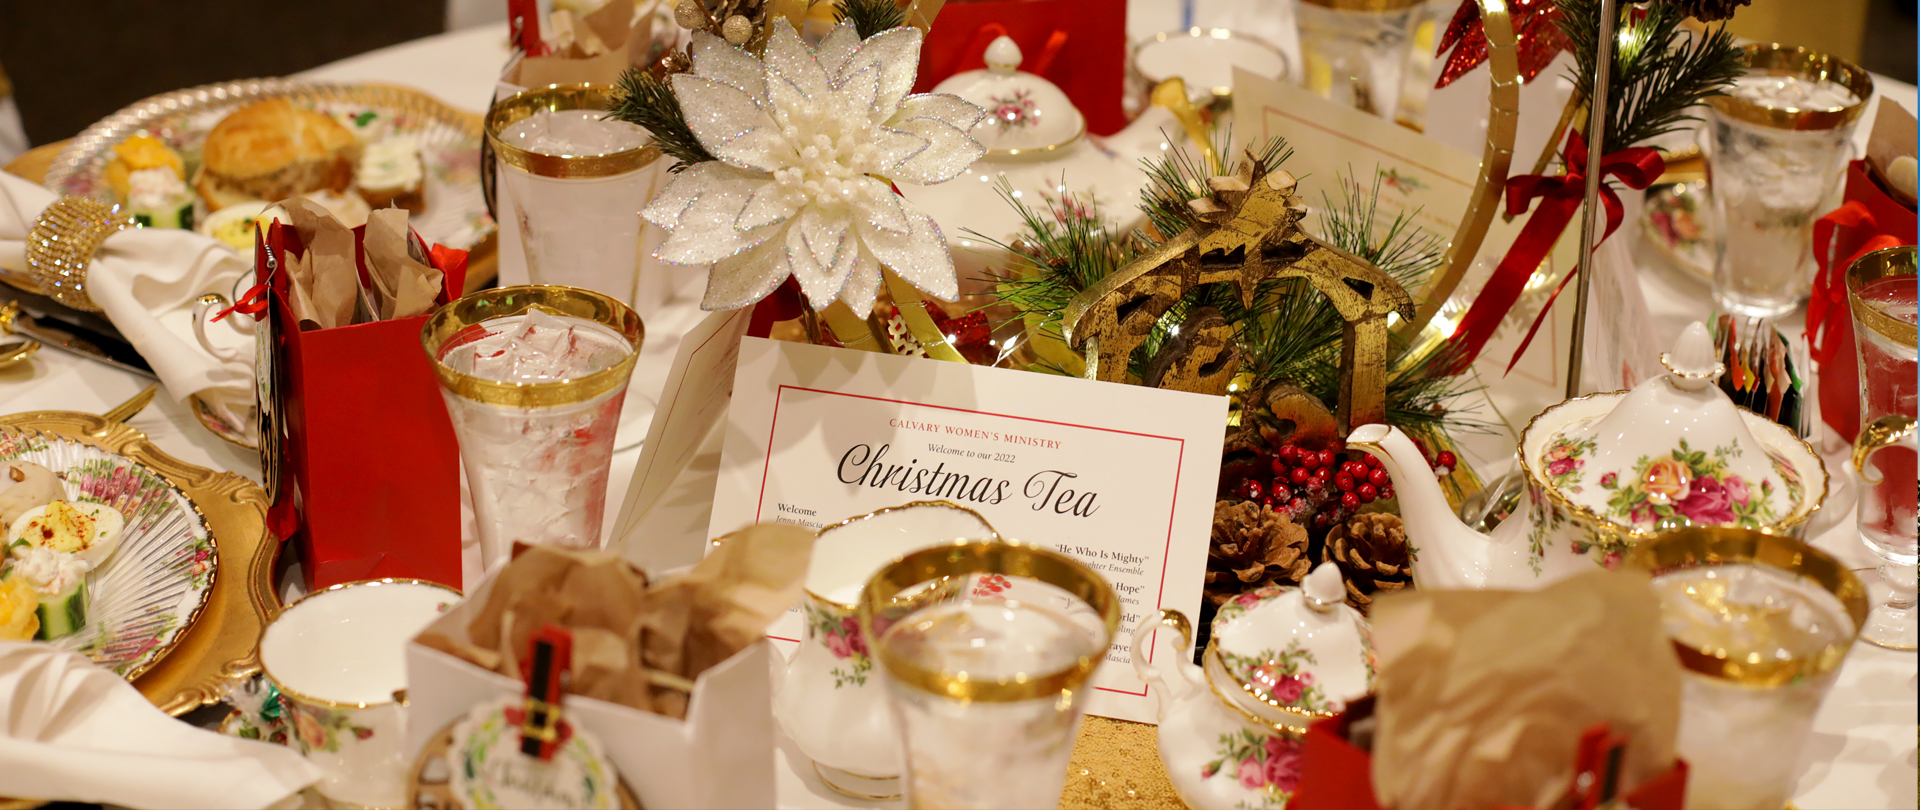 Christmas Tea
Saturday, December 2
 
